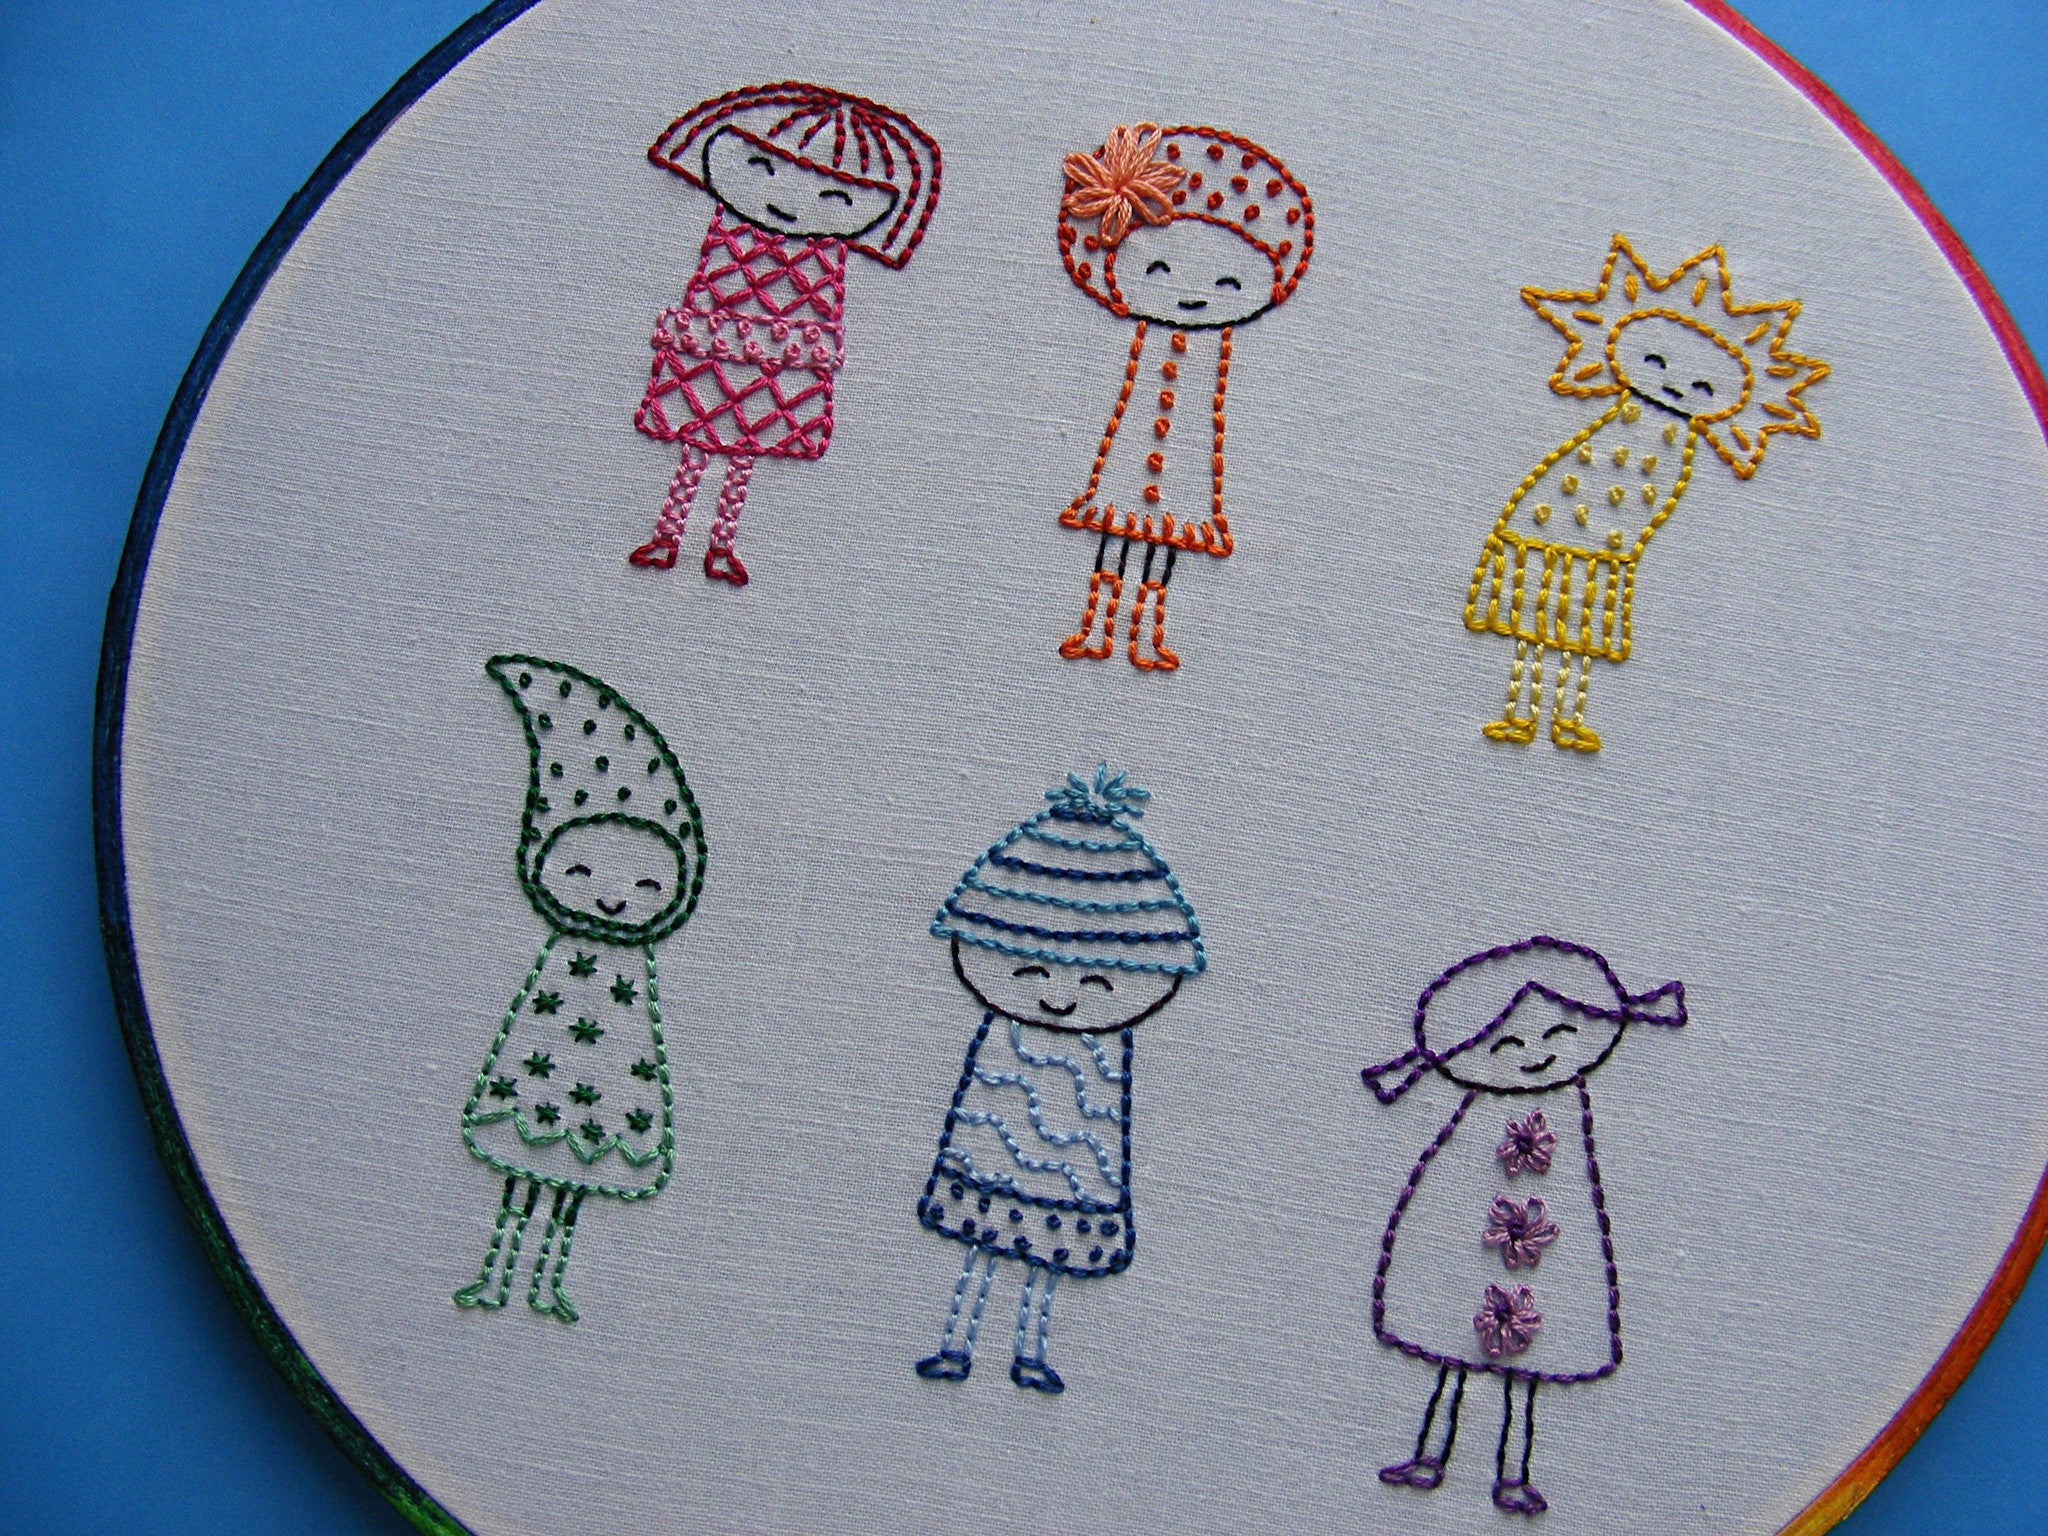 Rainbow Girls embroidery pattern